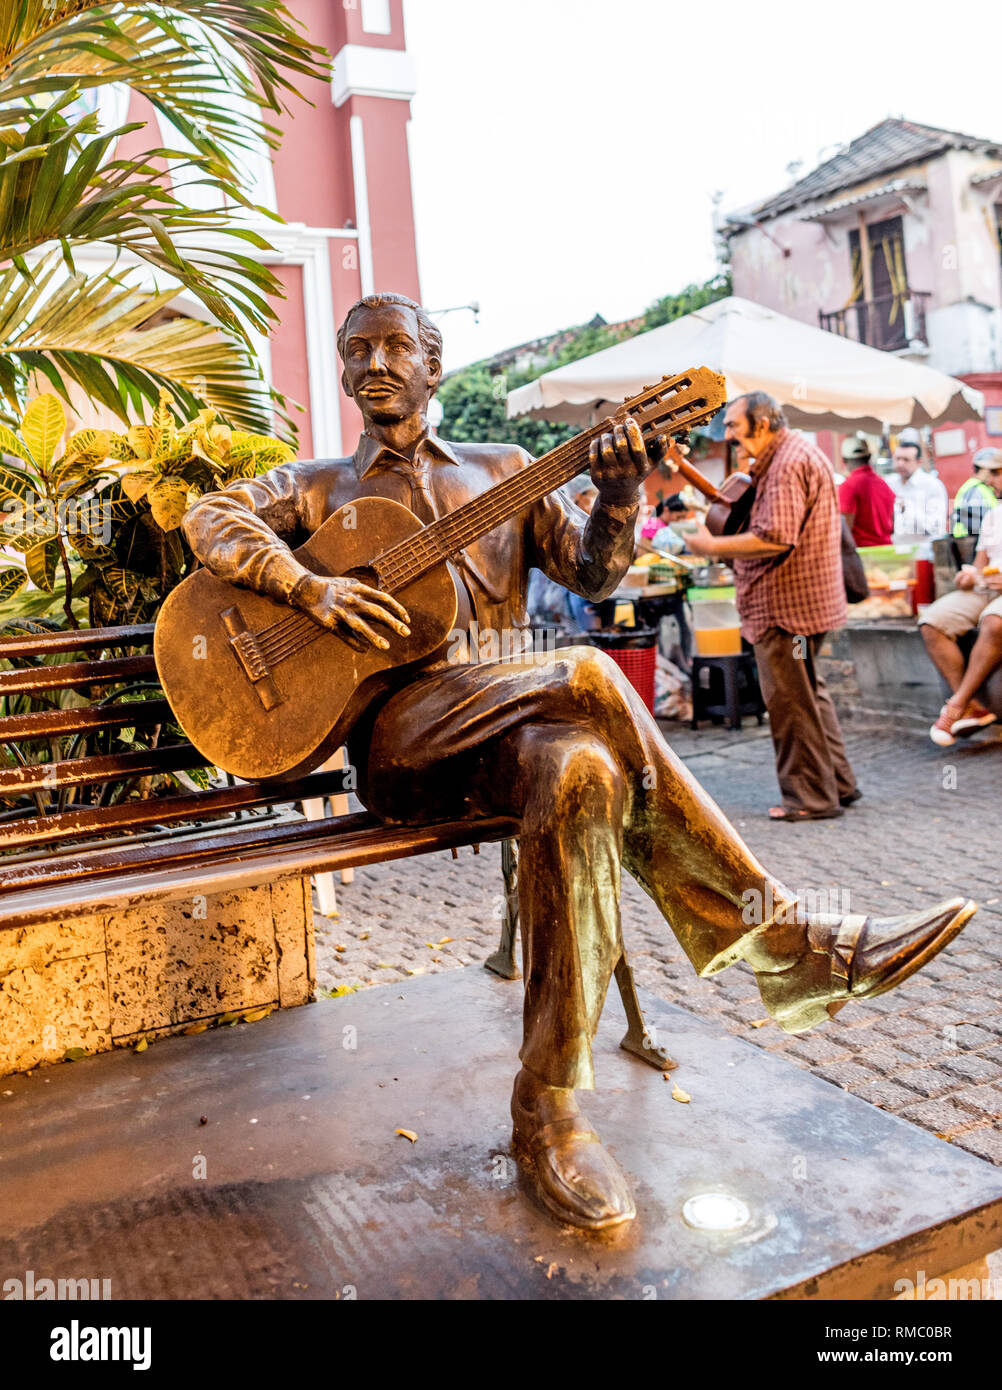 Guitarist Sculpture In Plaza De San Diego Cartagena Colombia South America Stock Photo